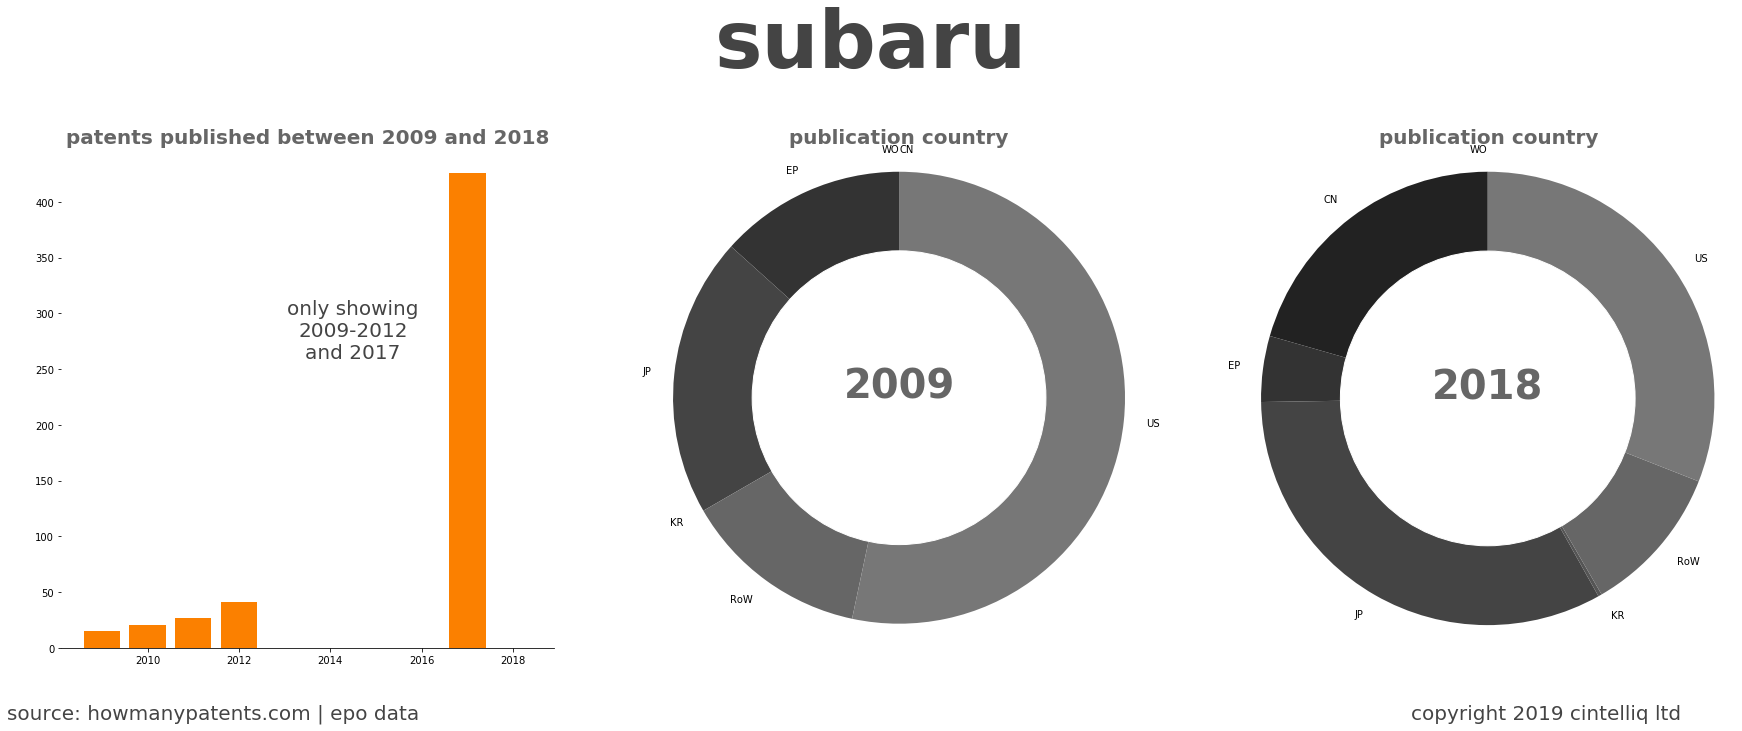 summary of patents for Subaru